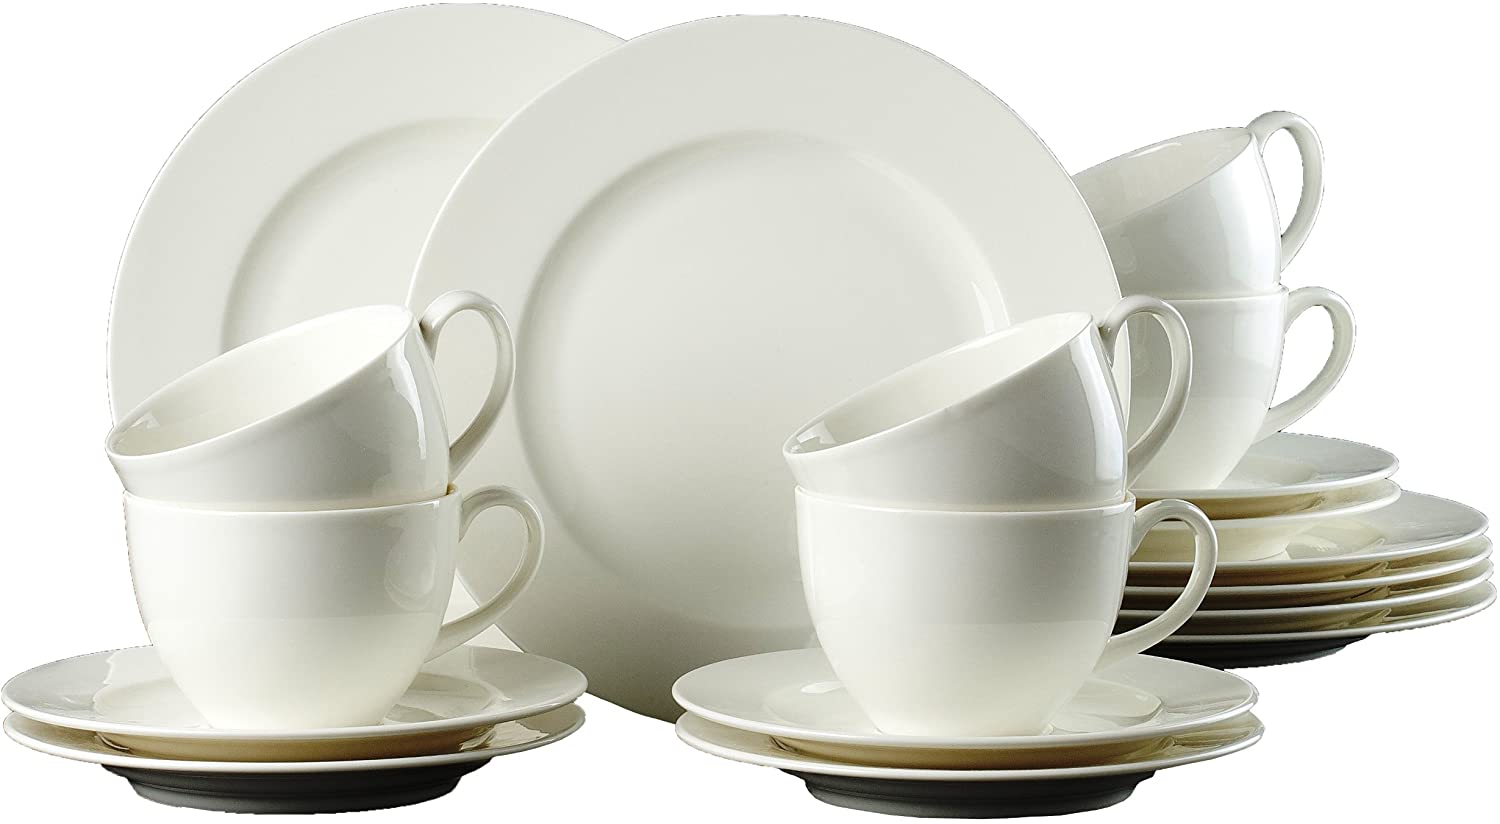 Ritzenhoff & Breker Coffee Set Solino, High Quality Porcelain, 18 Pieces, 60669